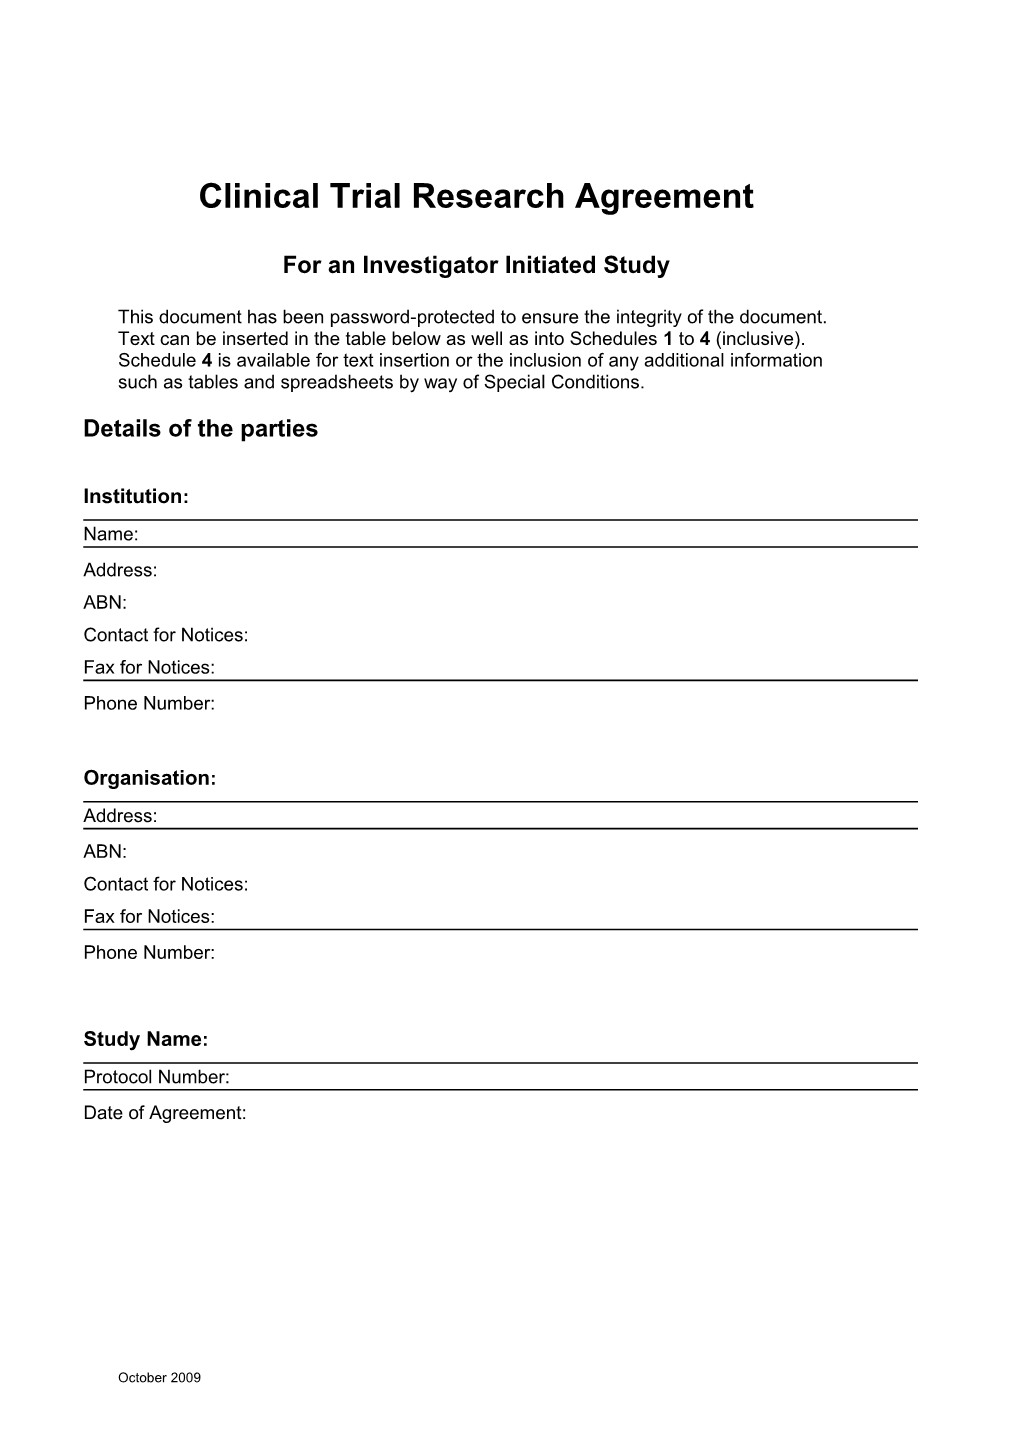 CTRA Investigator Initiated Study